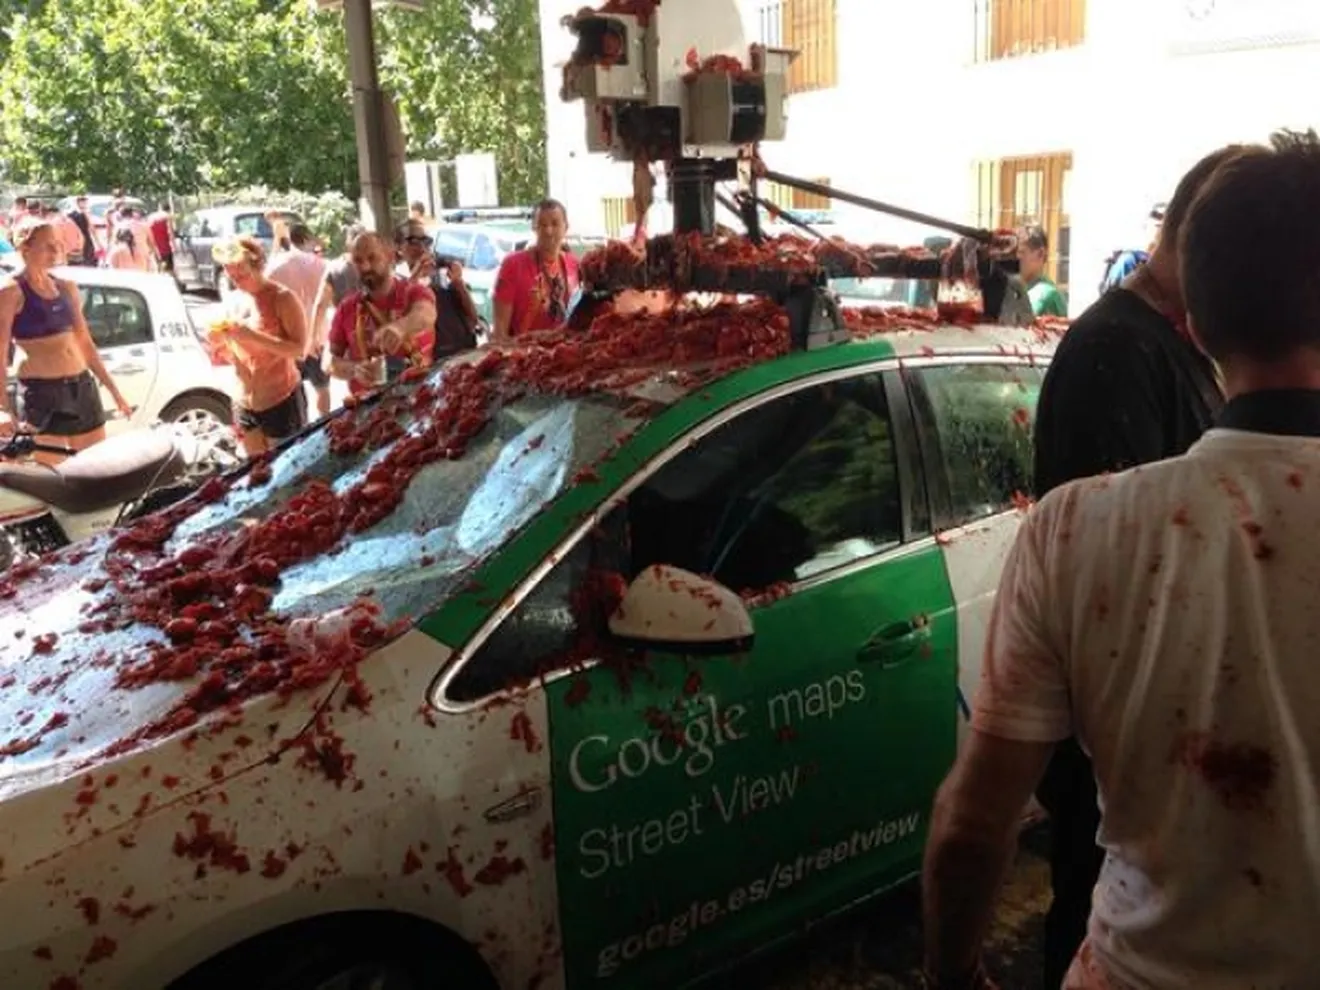 El coche de Google Street View sufre la Tomatina